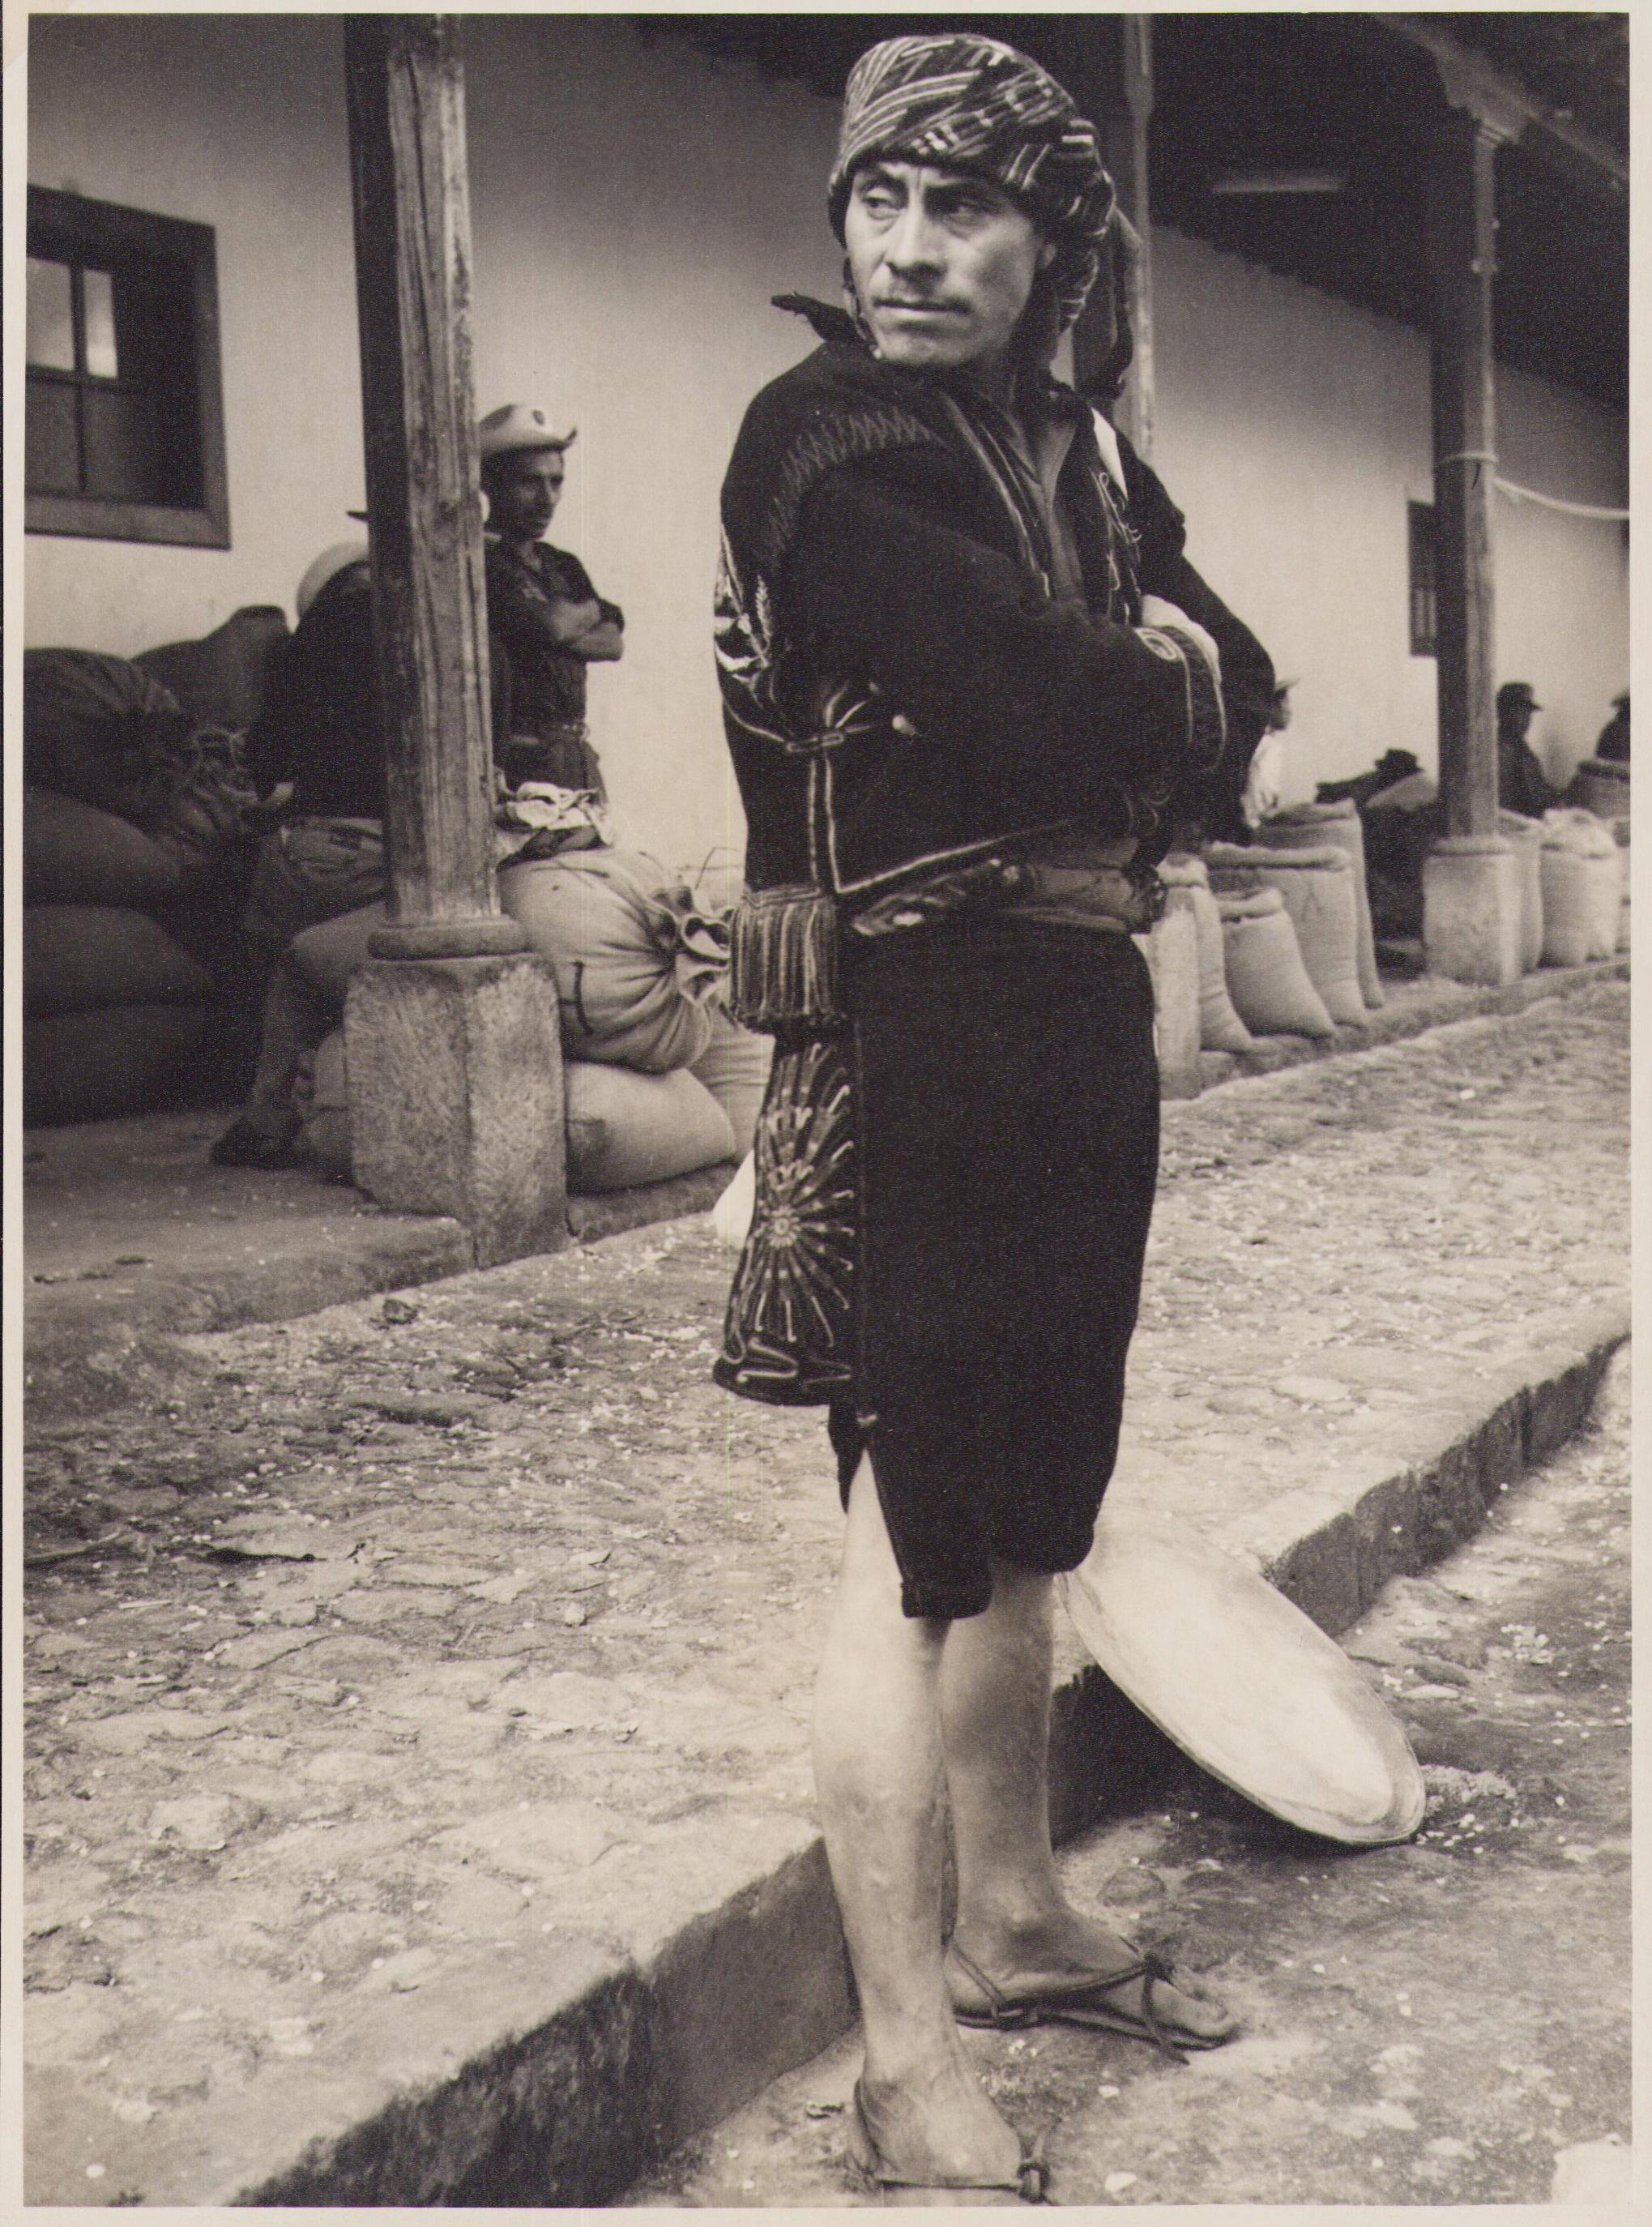 Hanna Seidel Portrait Photograph - Guatemala, Man, Black and White Photography, ca. 1960s, 23, 1 x 17, 1 cm